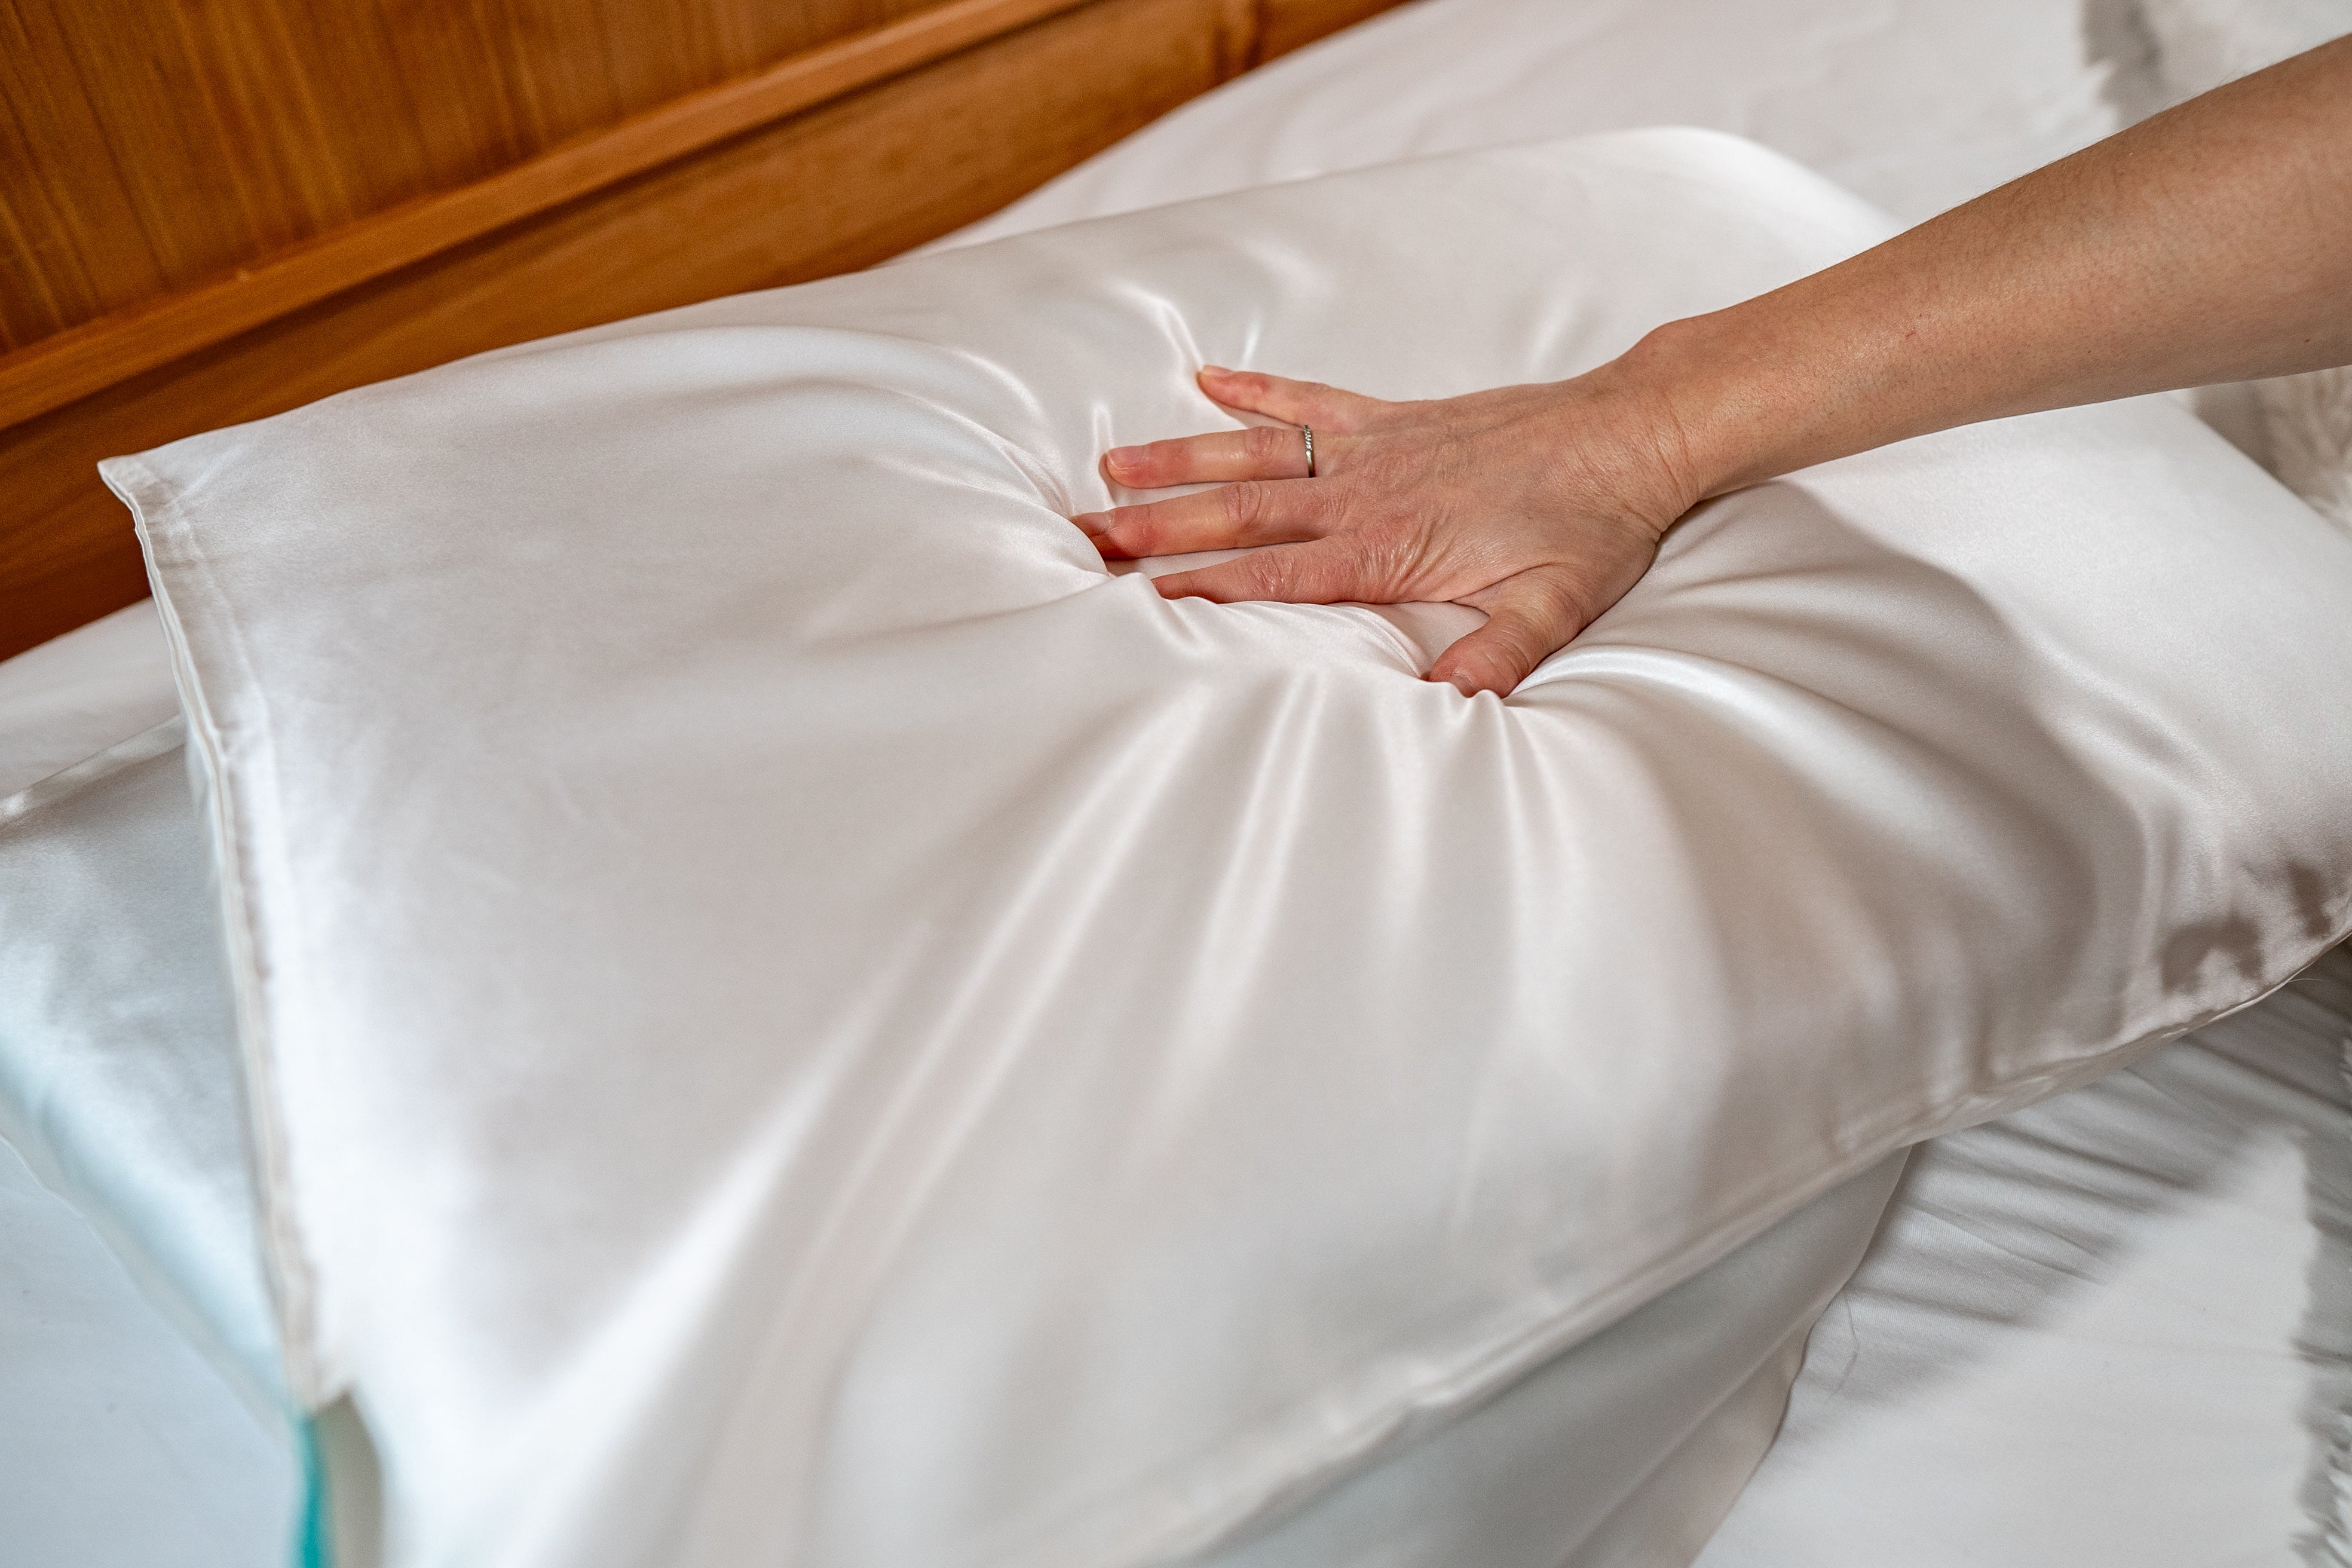 BLISSBURY Stomach Sleeping Pillow - White / Standard